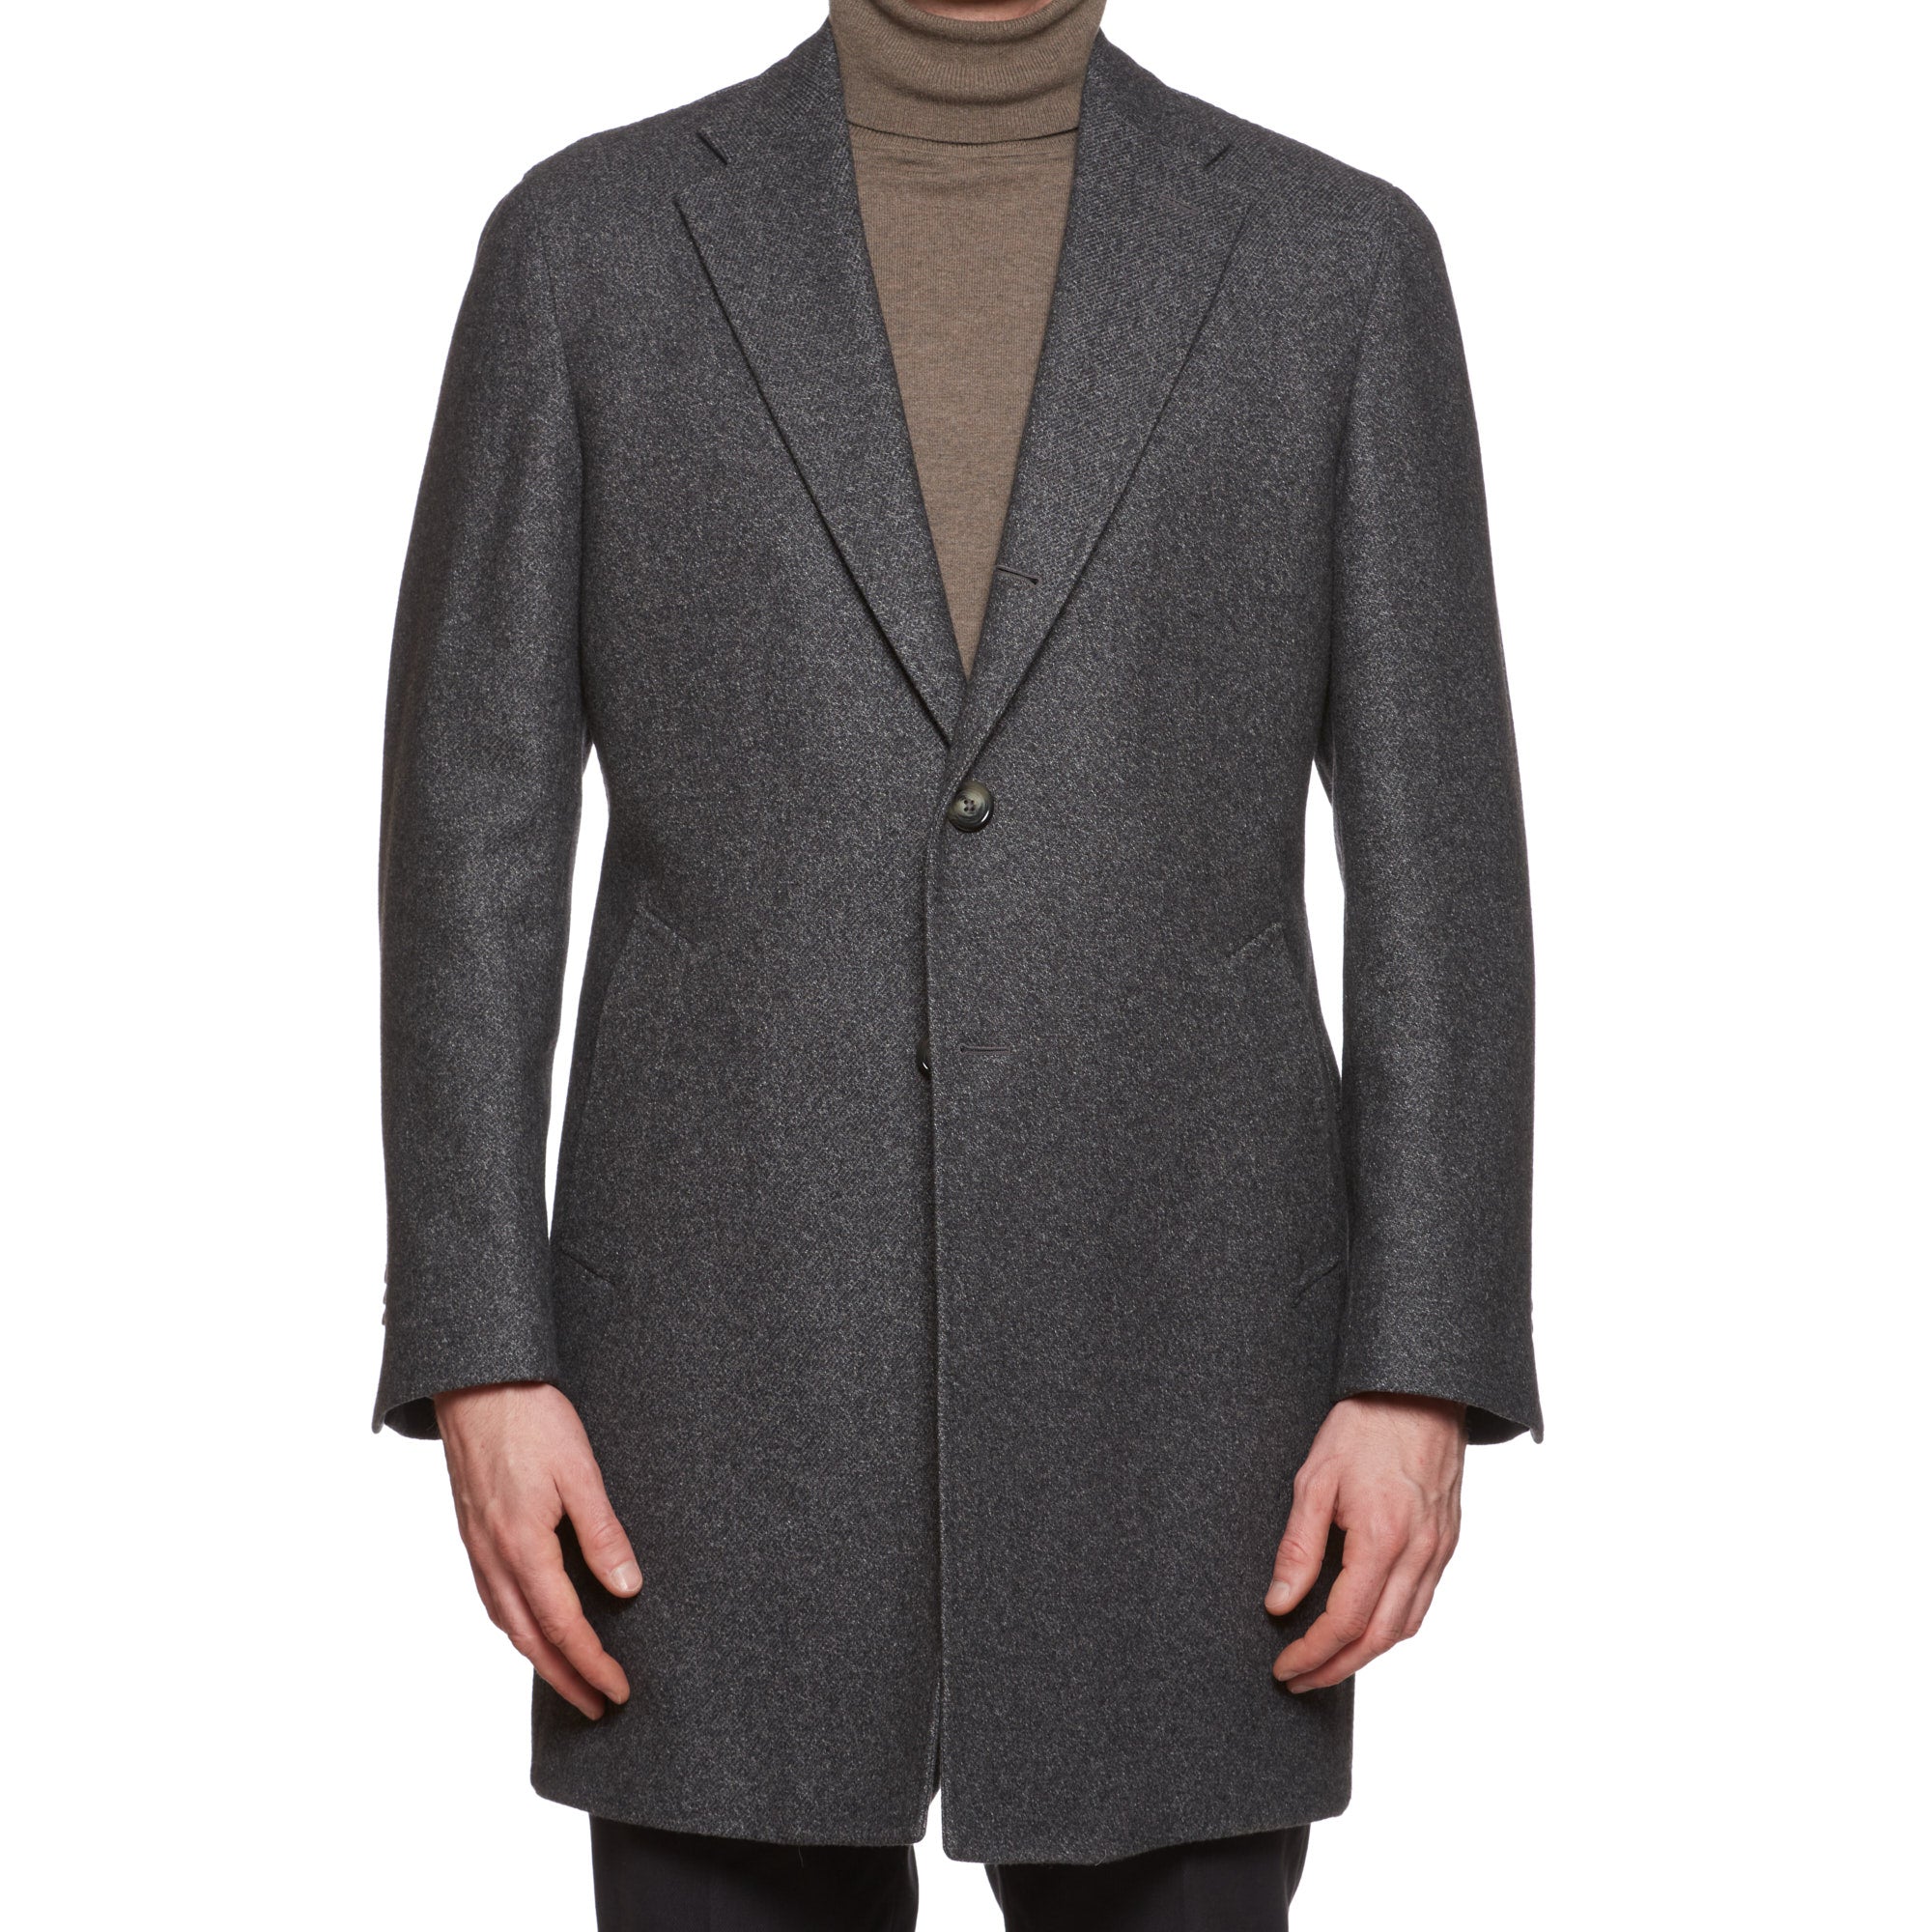 VINCENZO PALUMBO Napoli "Viky" Gray Wool Back Belted Coat EU 52 NEW US 42